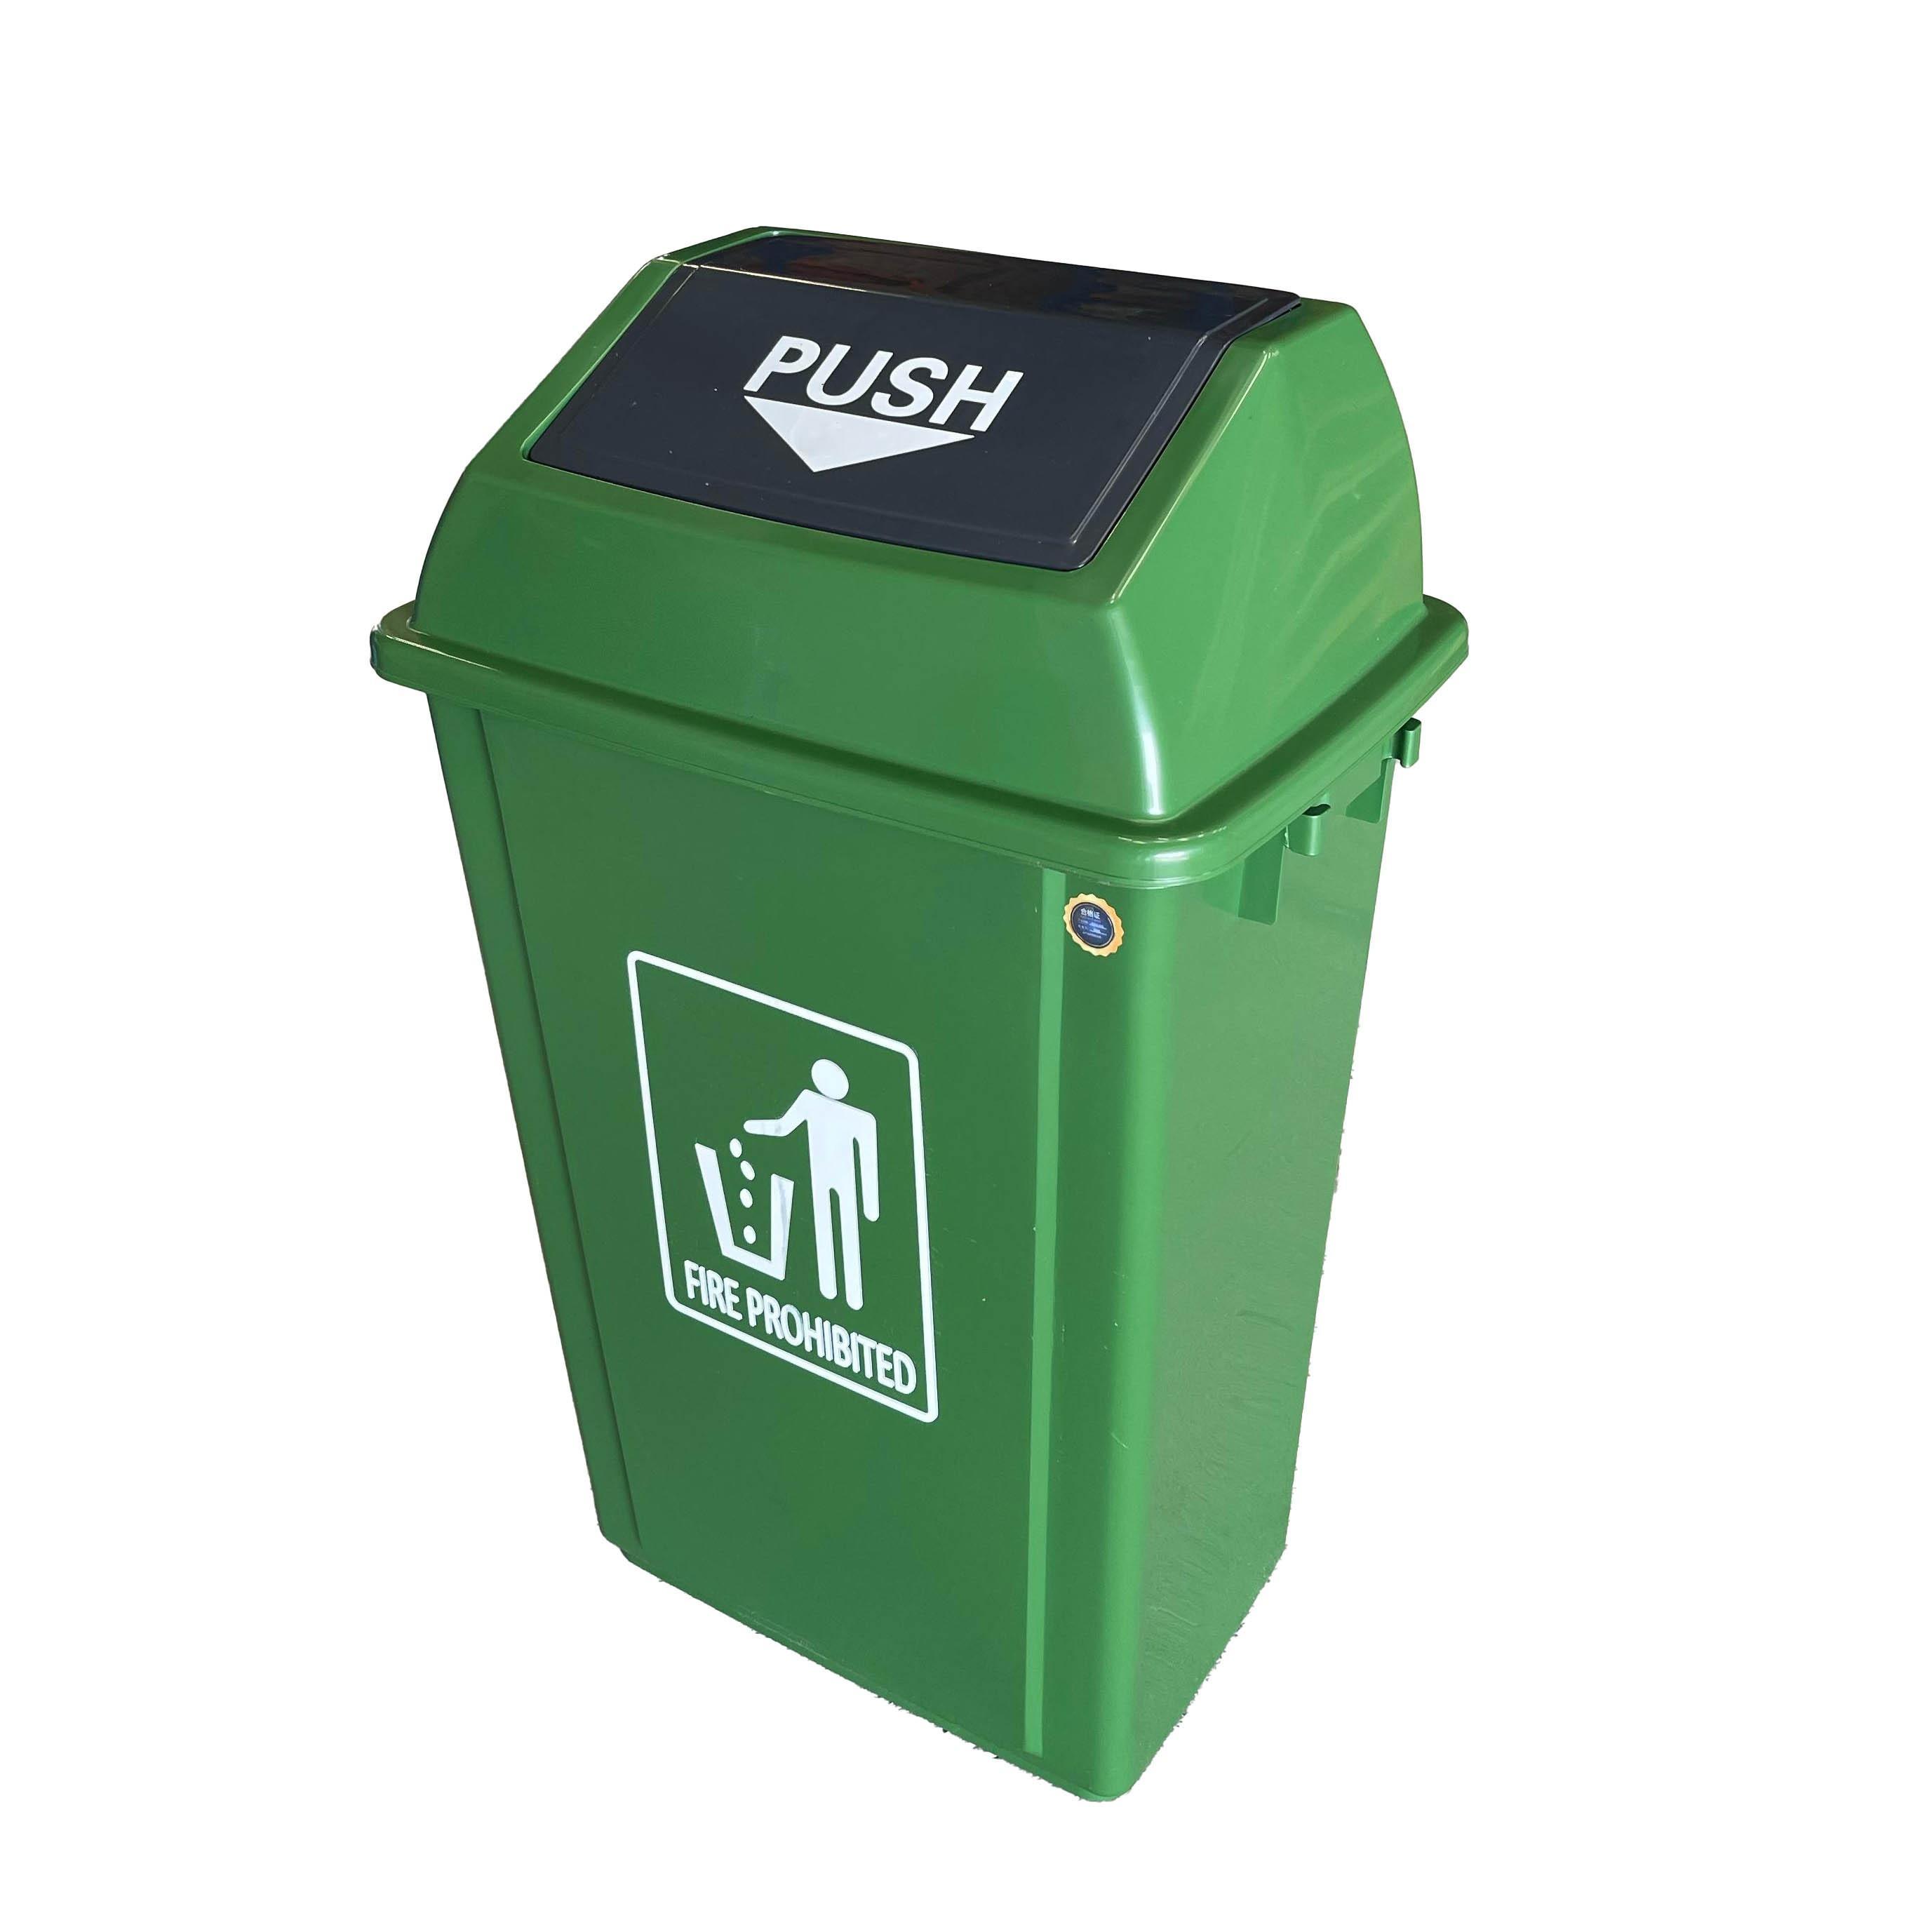 EK Quadrate Garbage Bin Green -60 Liter